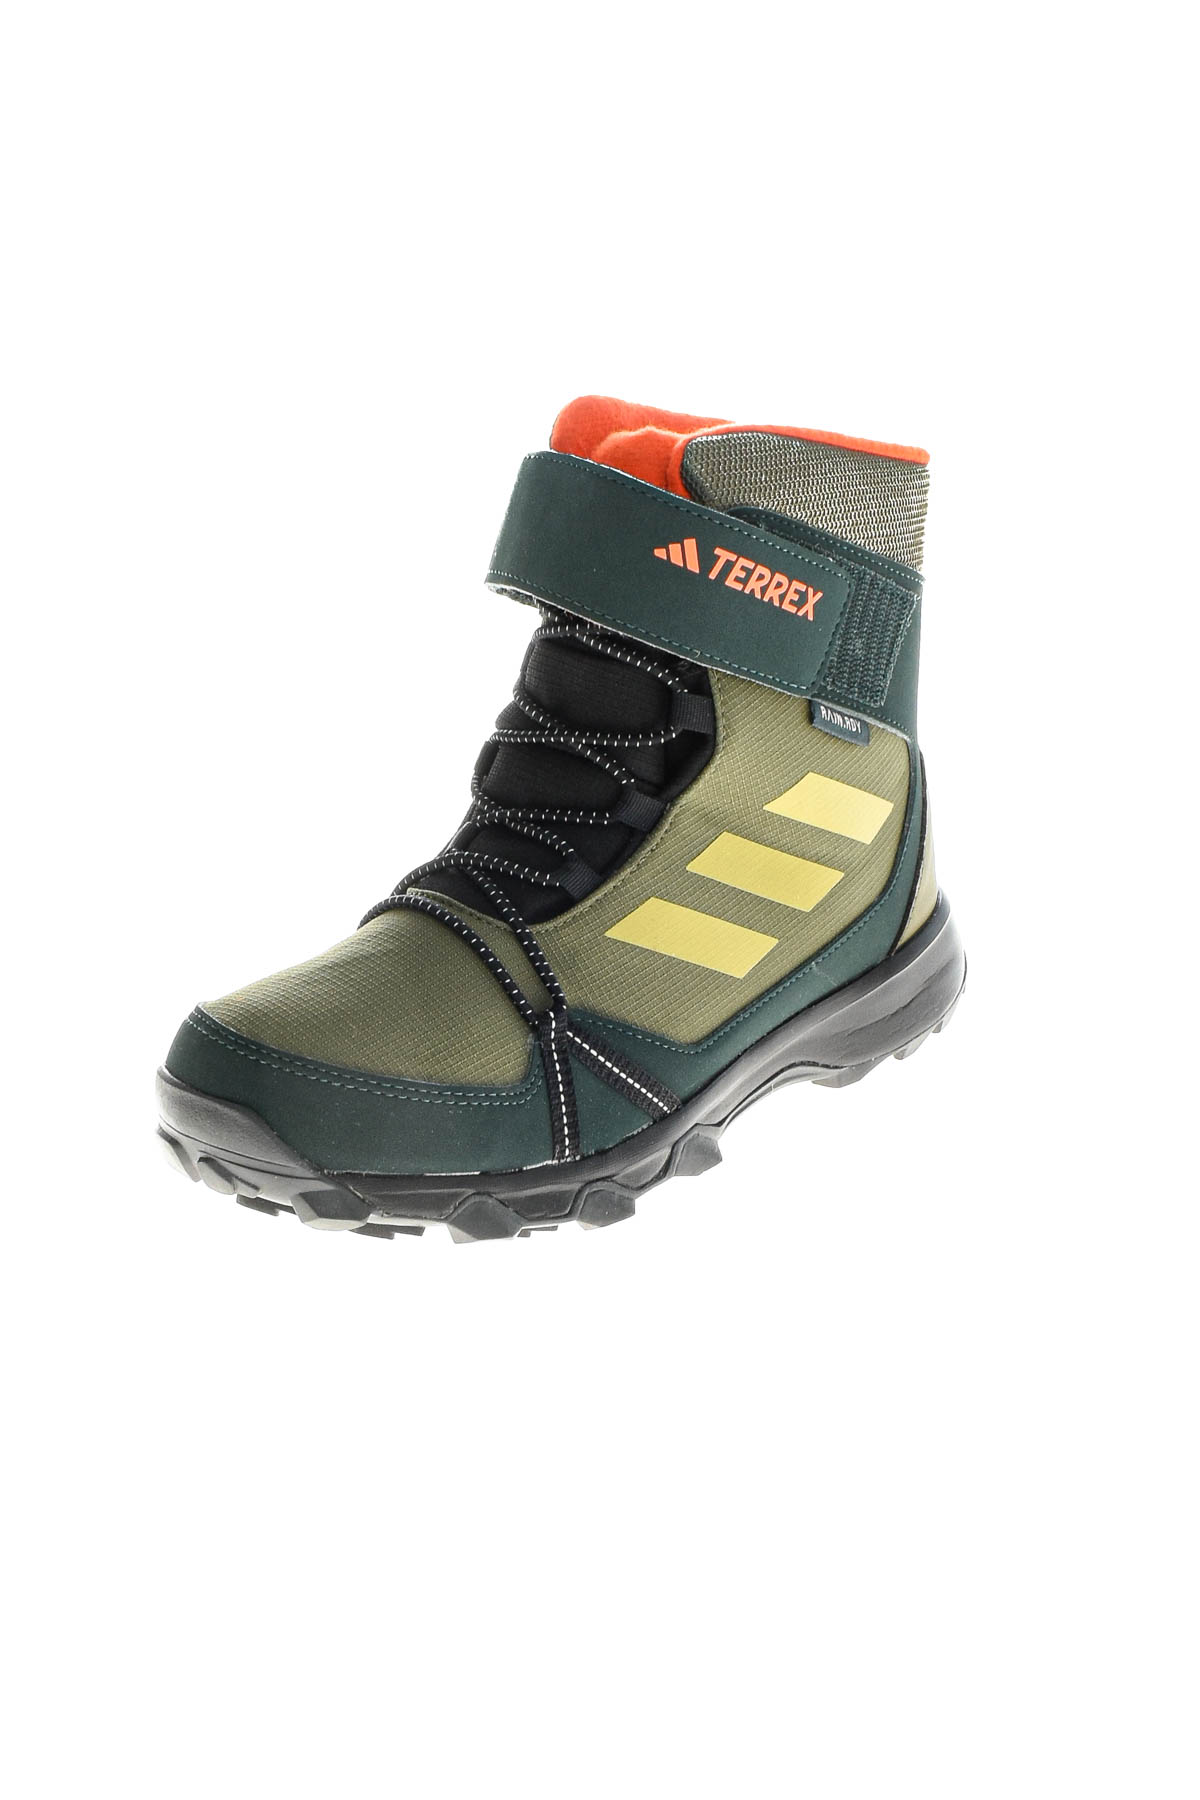 Boy's boots - Adidas - 1